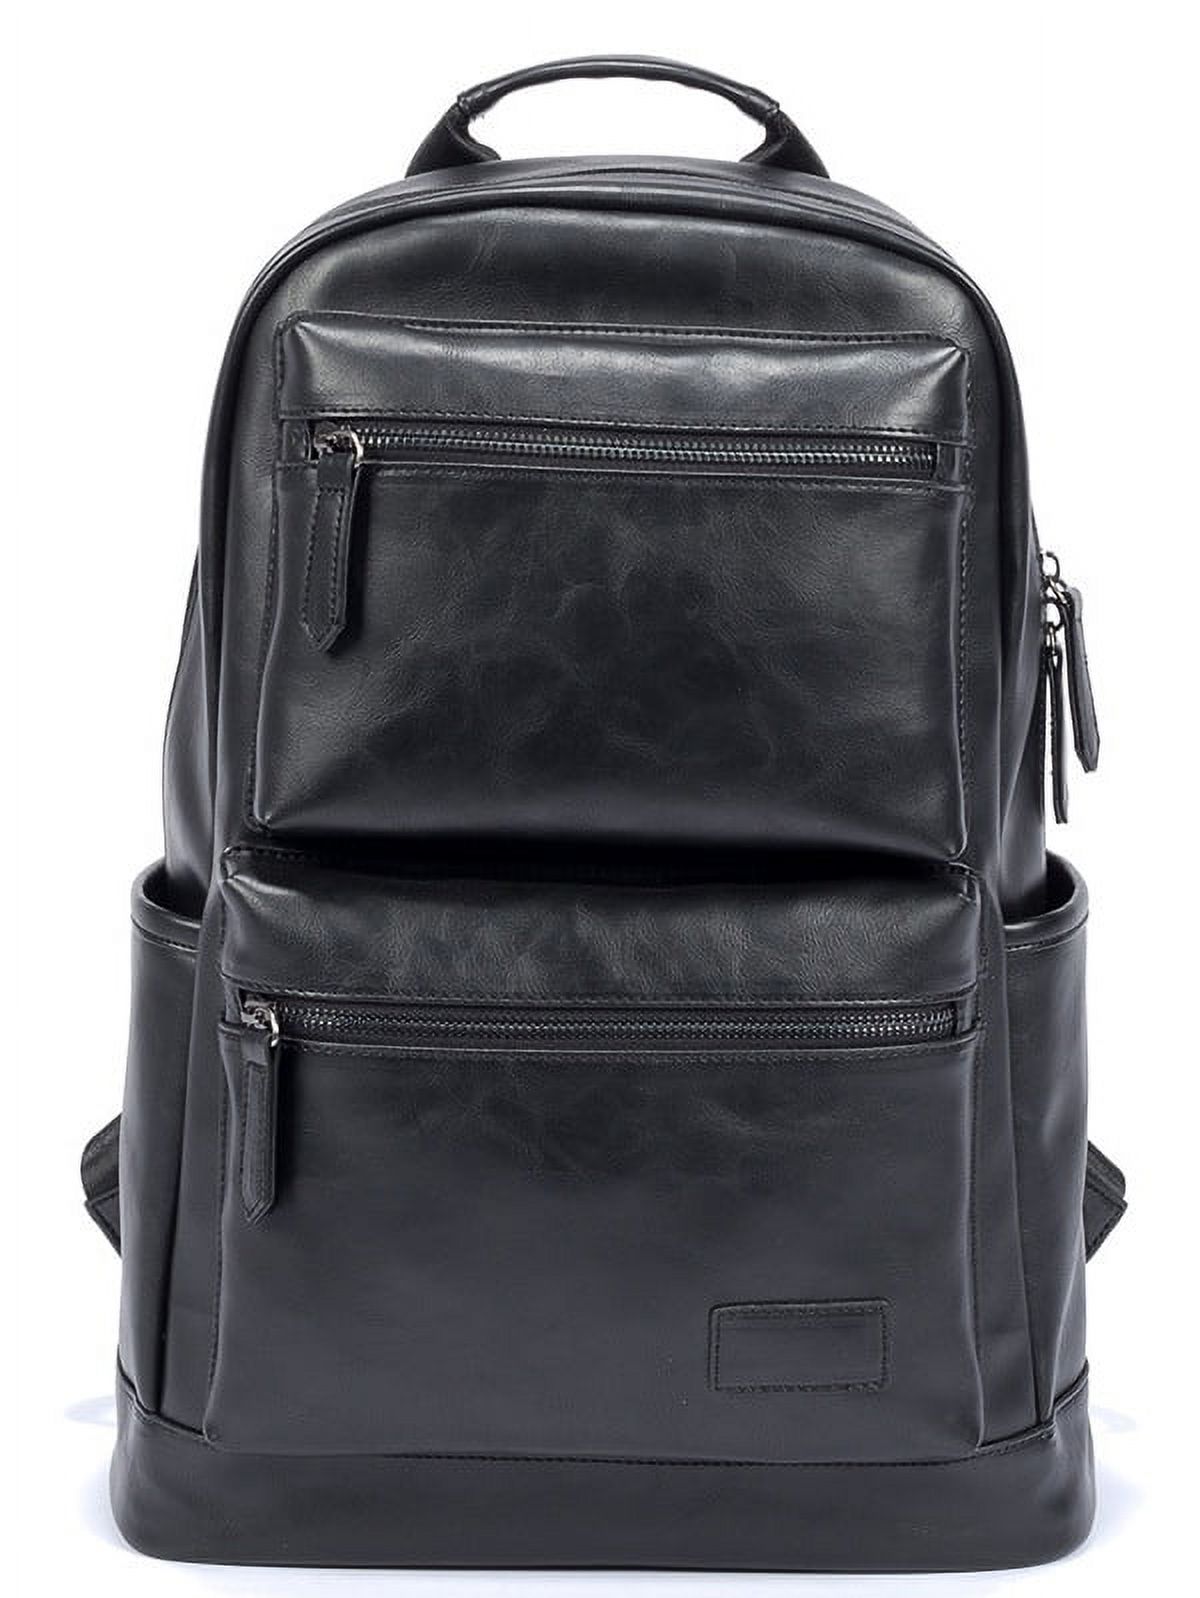 PU Leather Backpack Waterproof Travel Daypack School College Laptop Backpack College Rucksack Bookbag for Men - image 1 of 3